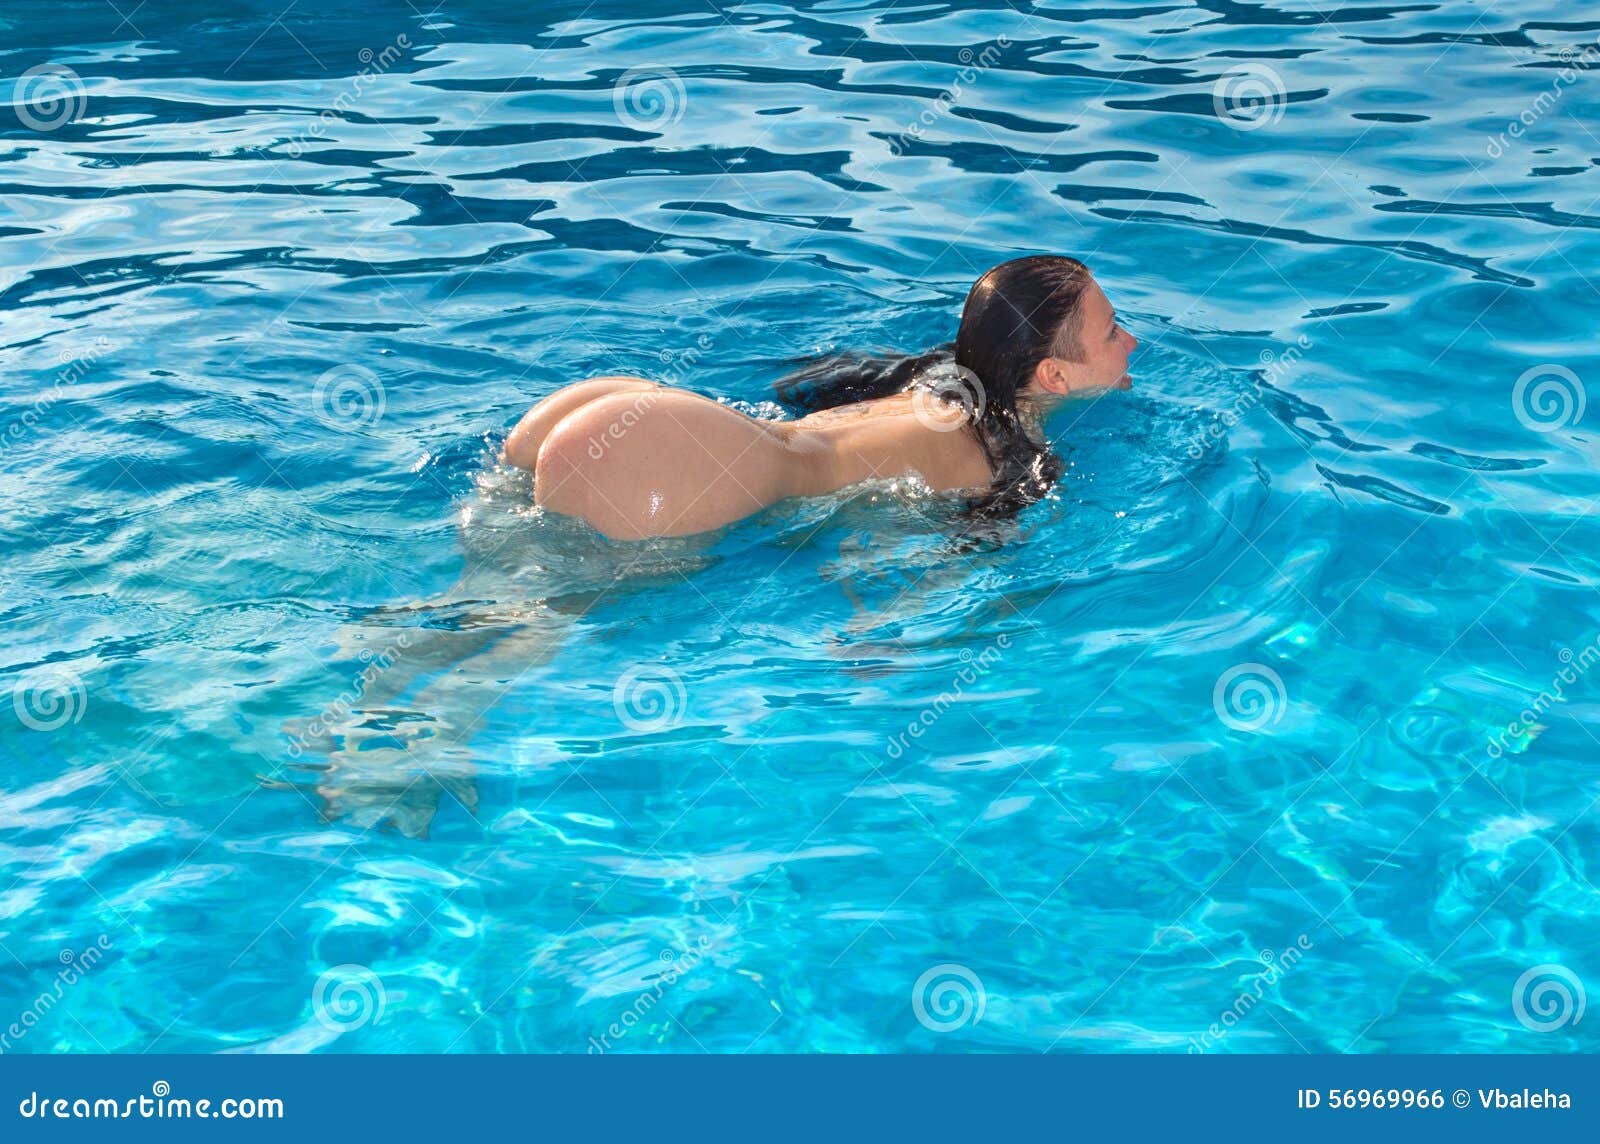 Best of Beautiful women swimming naked